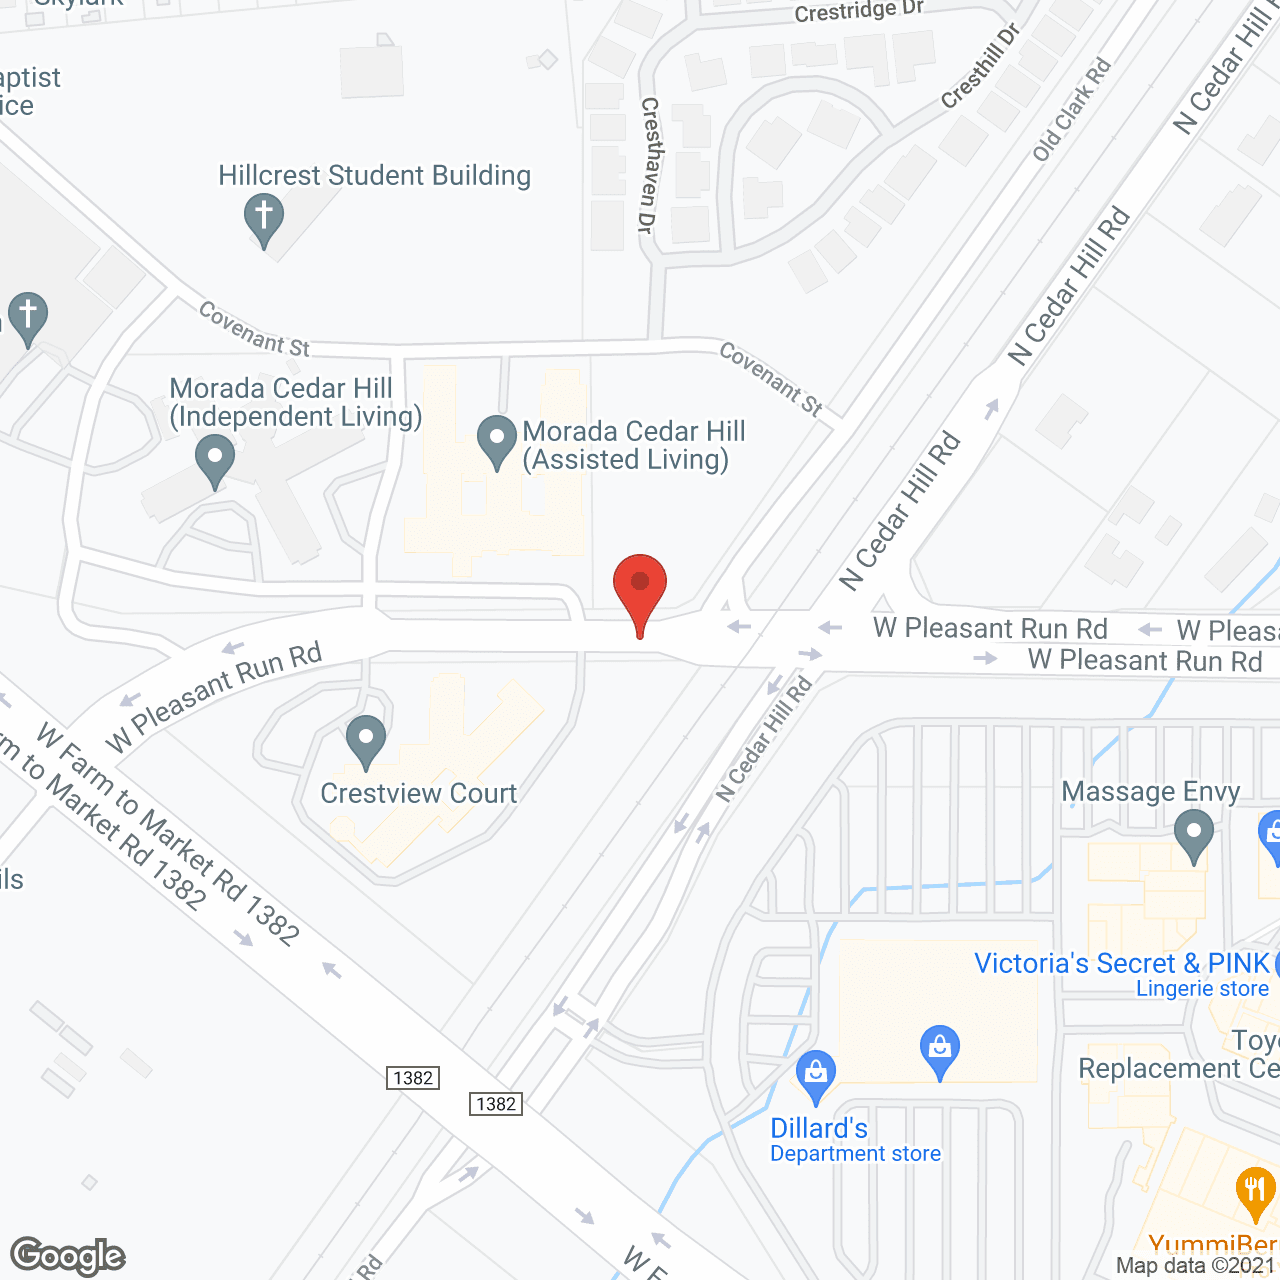 Crestview Court in google map